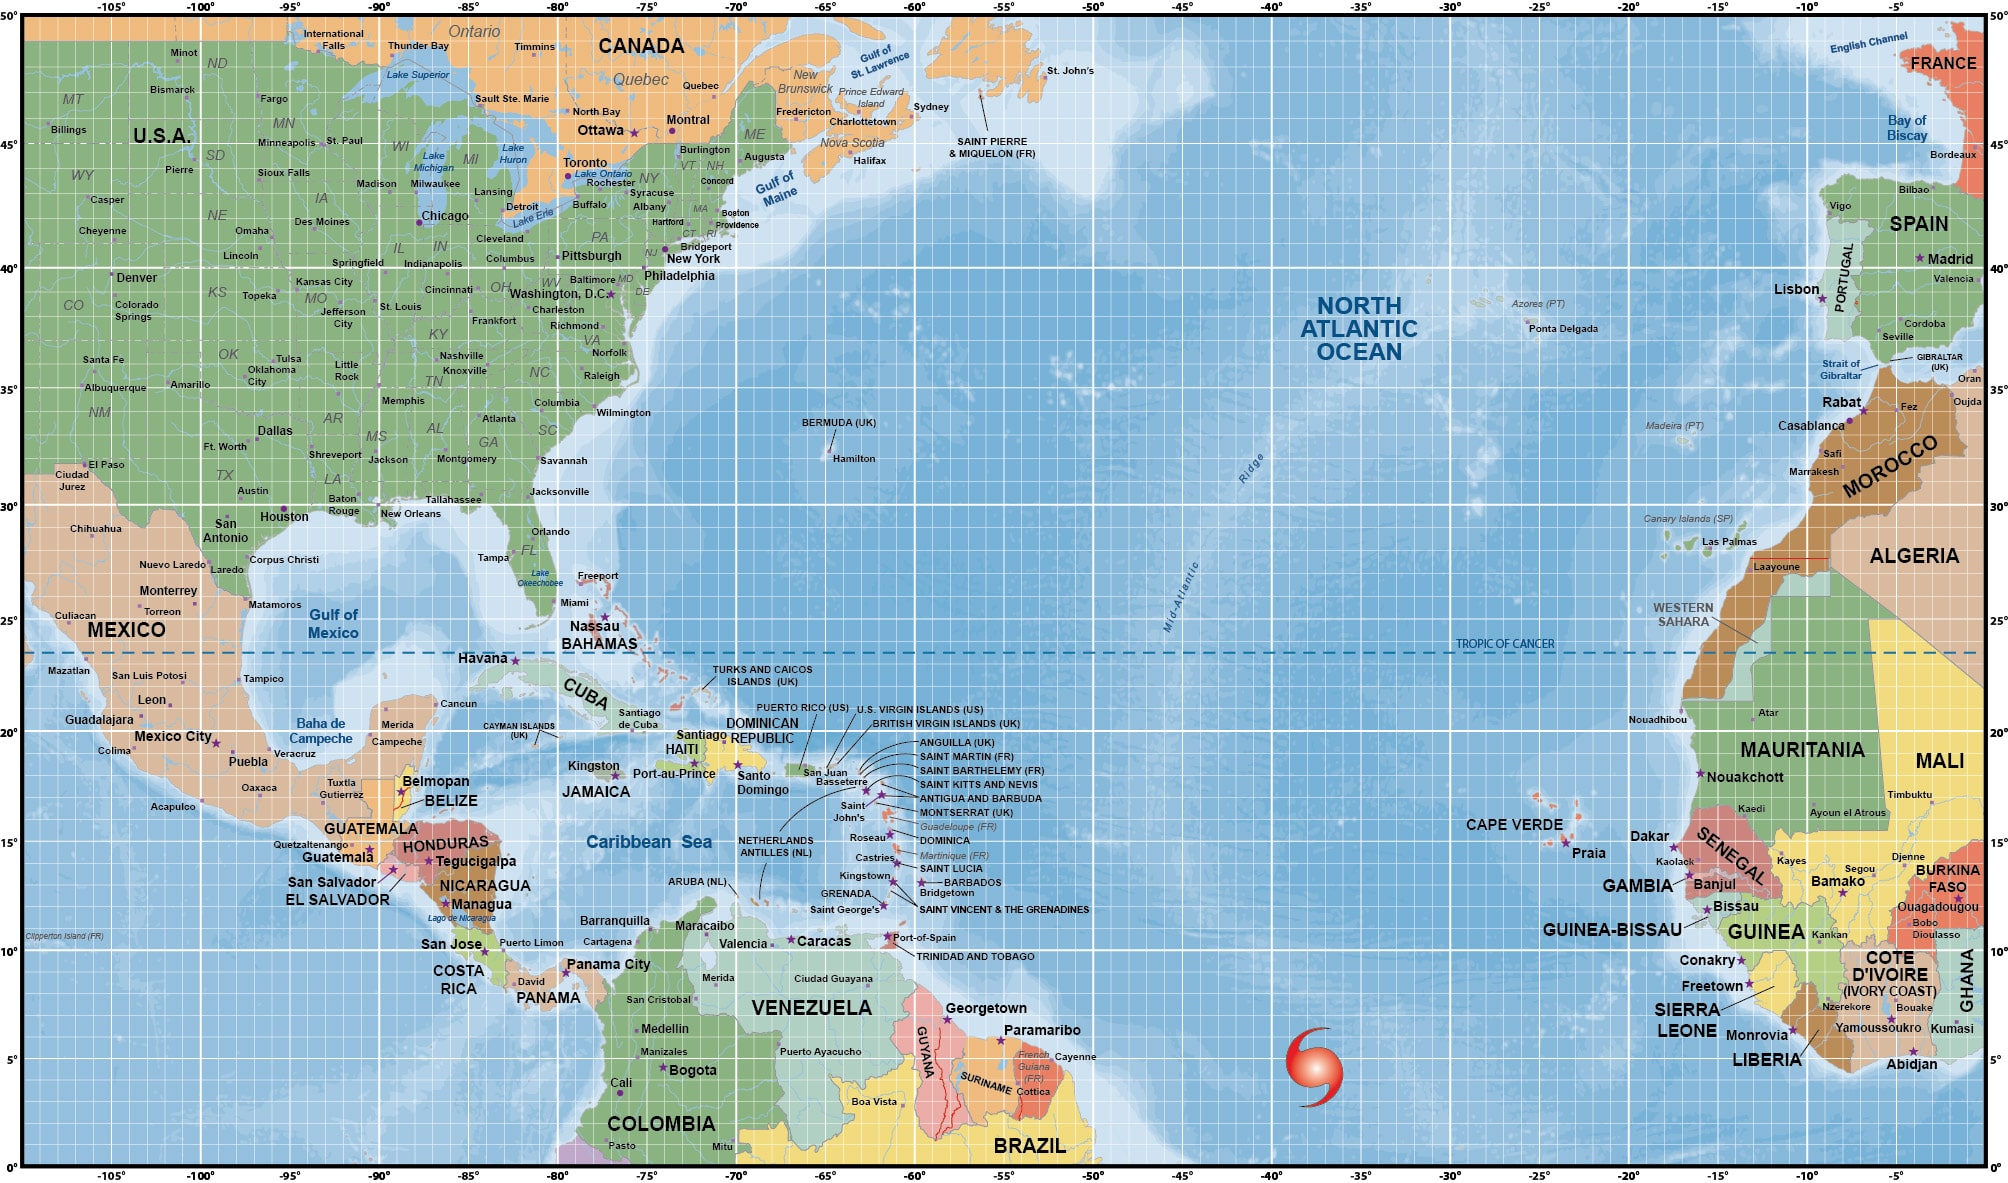 Atlantic Ocean Map With Lat & Long 